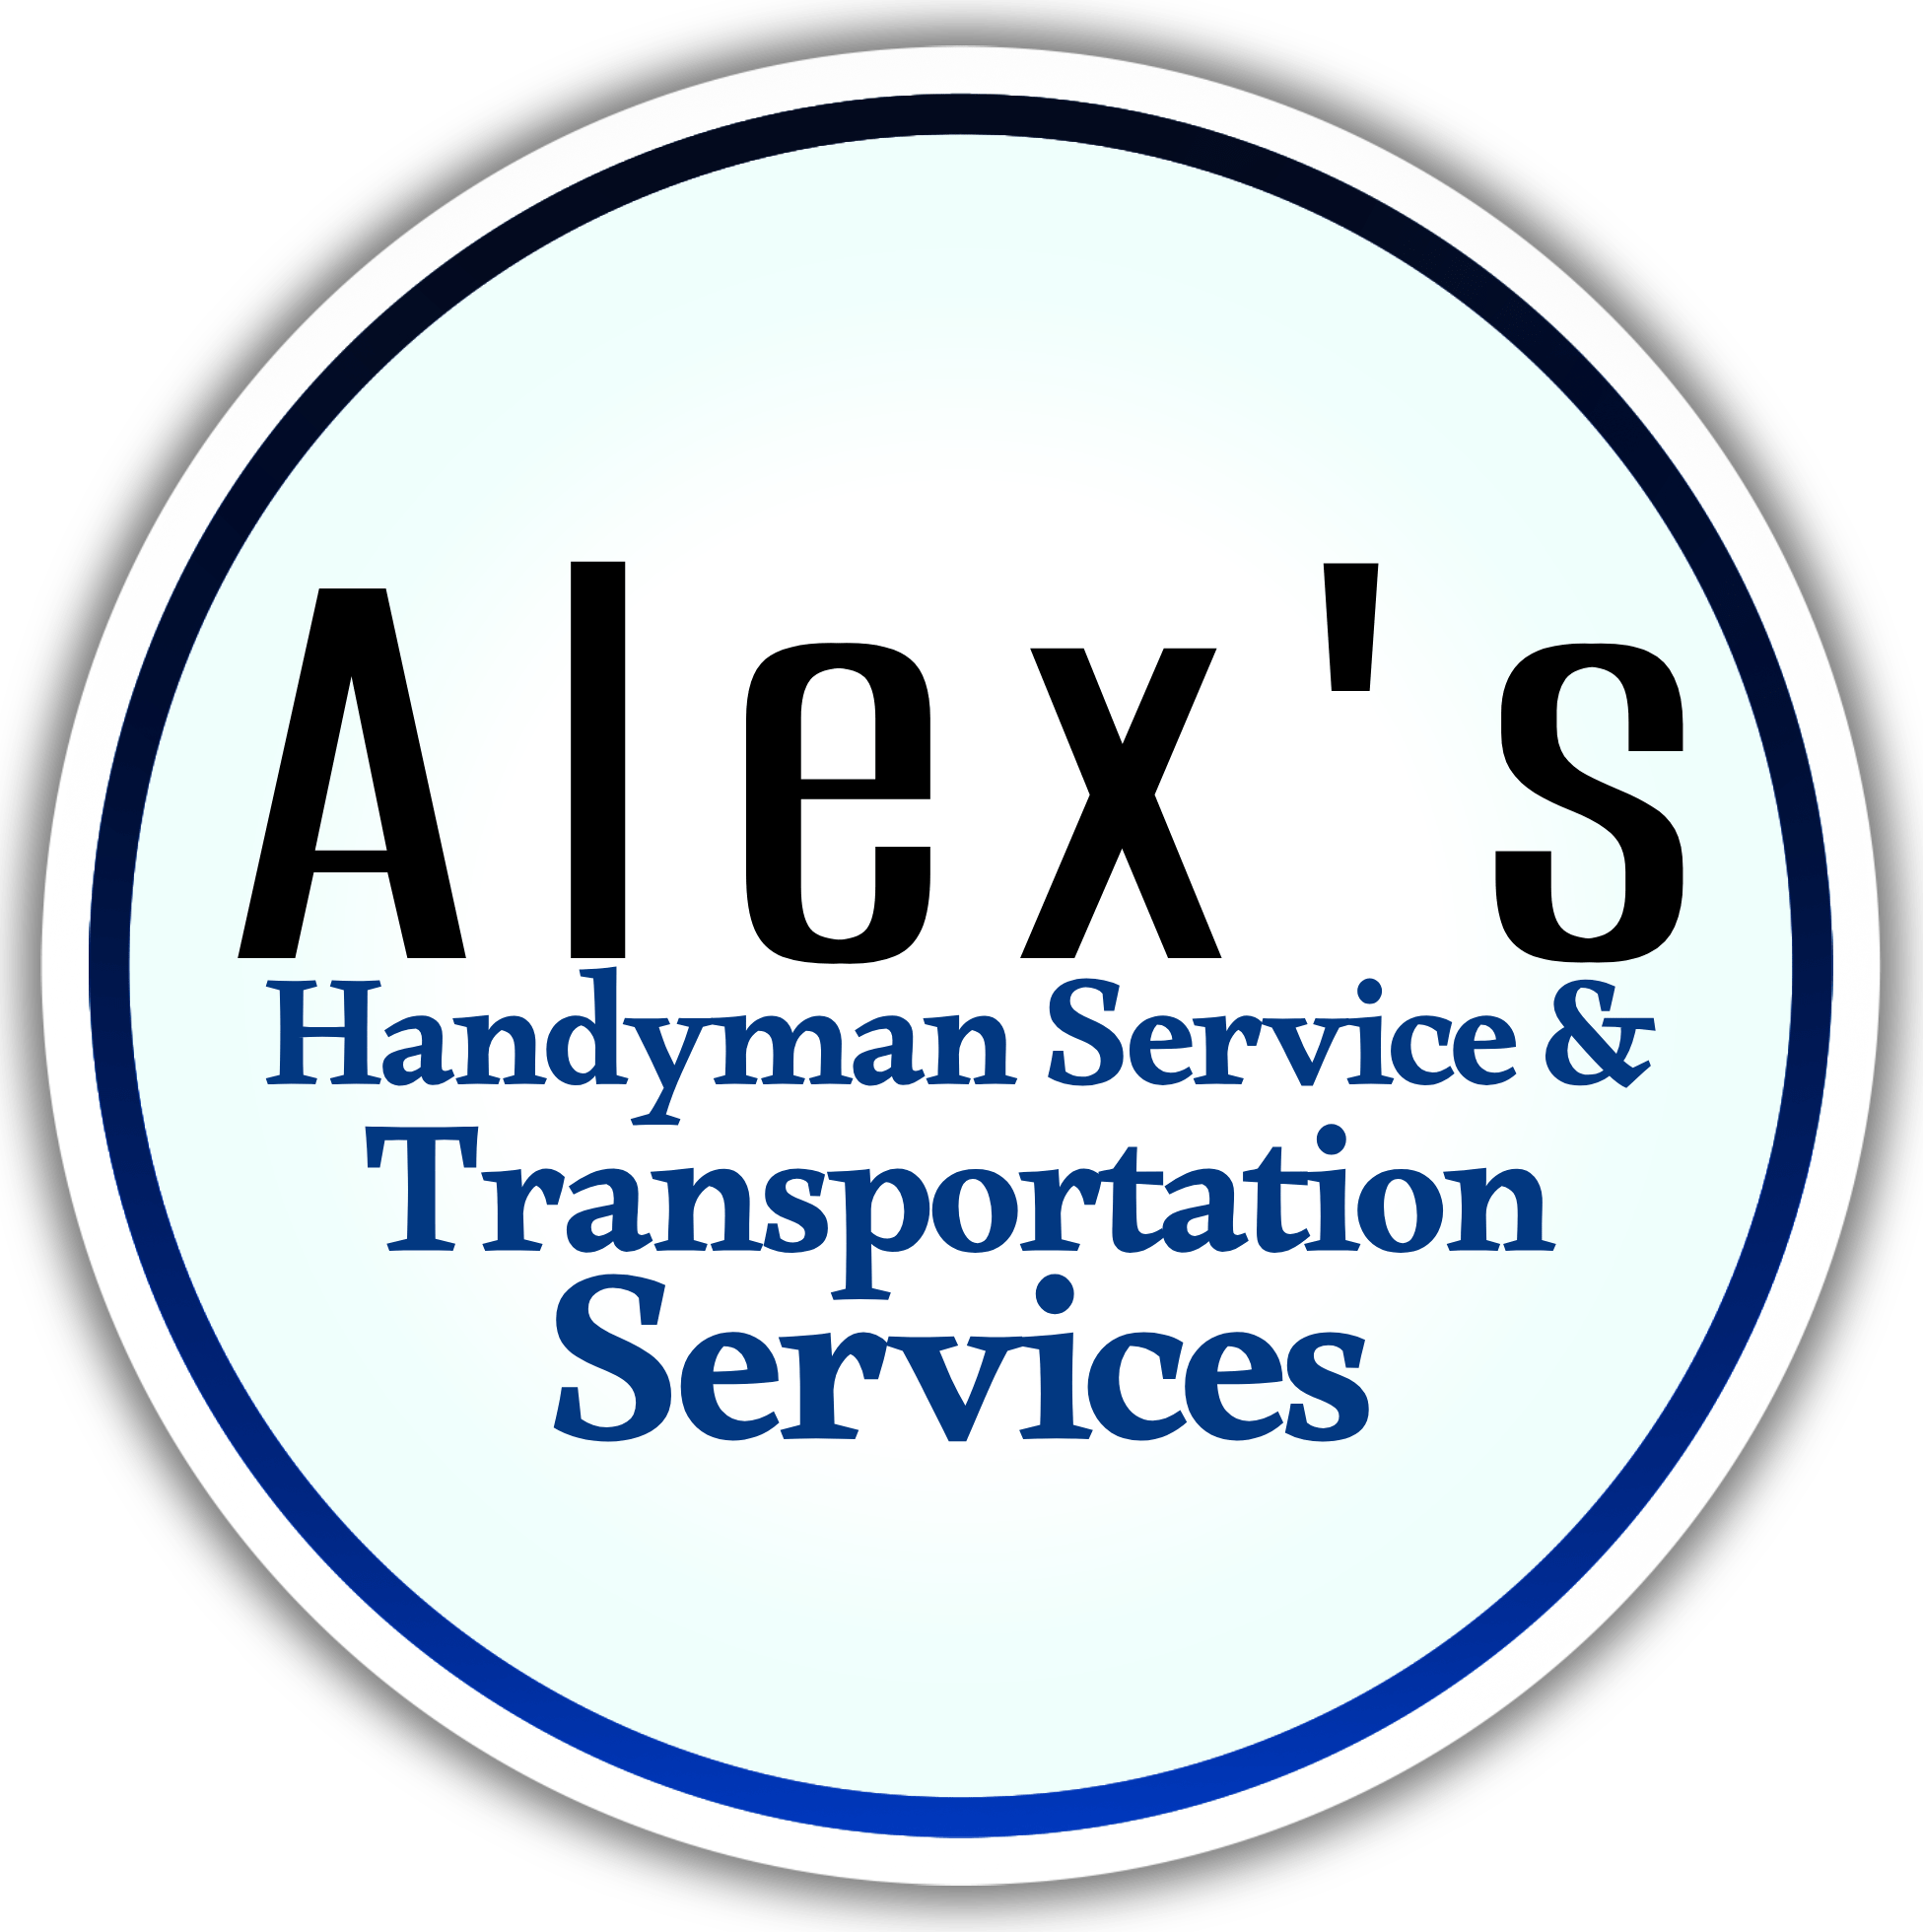 Alex's Handyman Service & Transportation Services